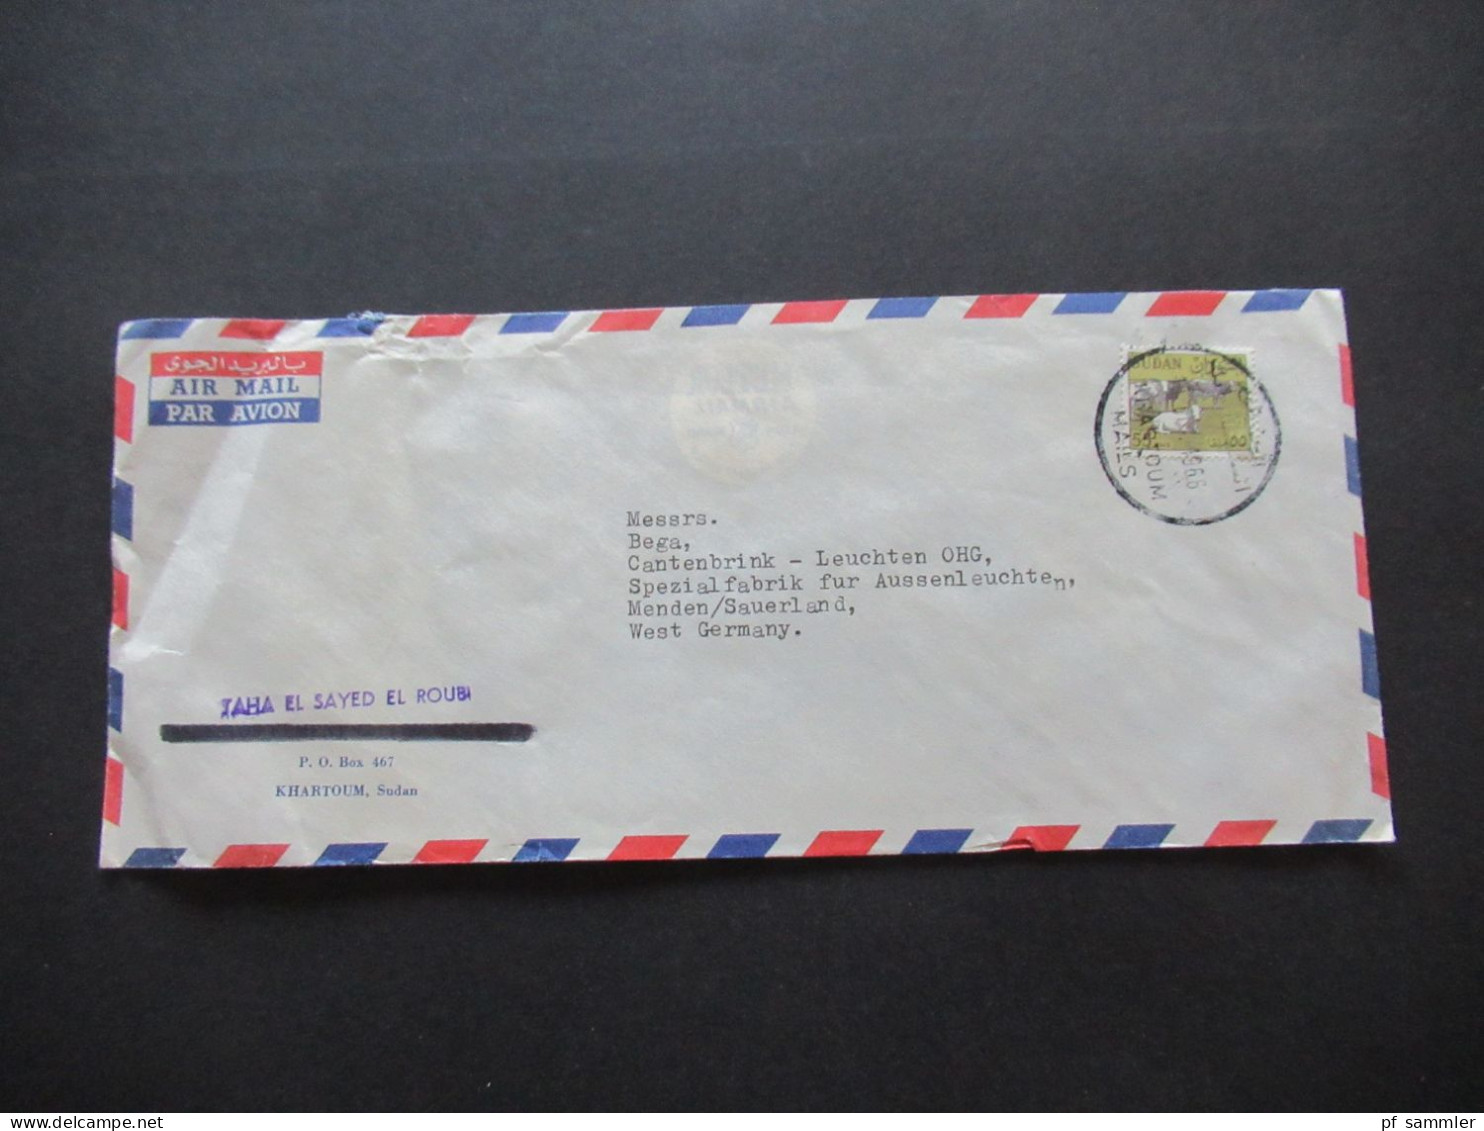 Afrika Sudan 1966 Air Mail Cover Stempel Khartoum Mails Sudan Umschlag Violetter Stempel Taha El Sayed El Roubi - Sudan (1954-...)